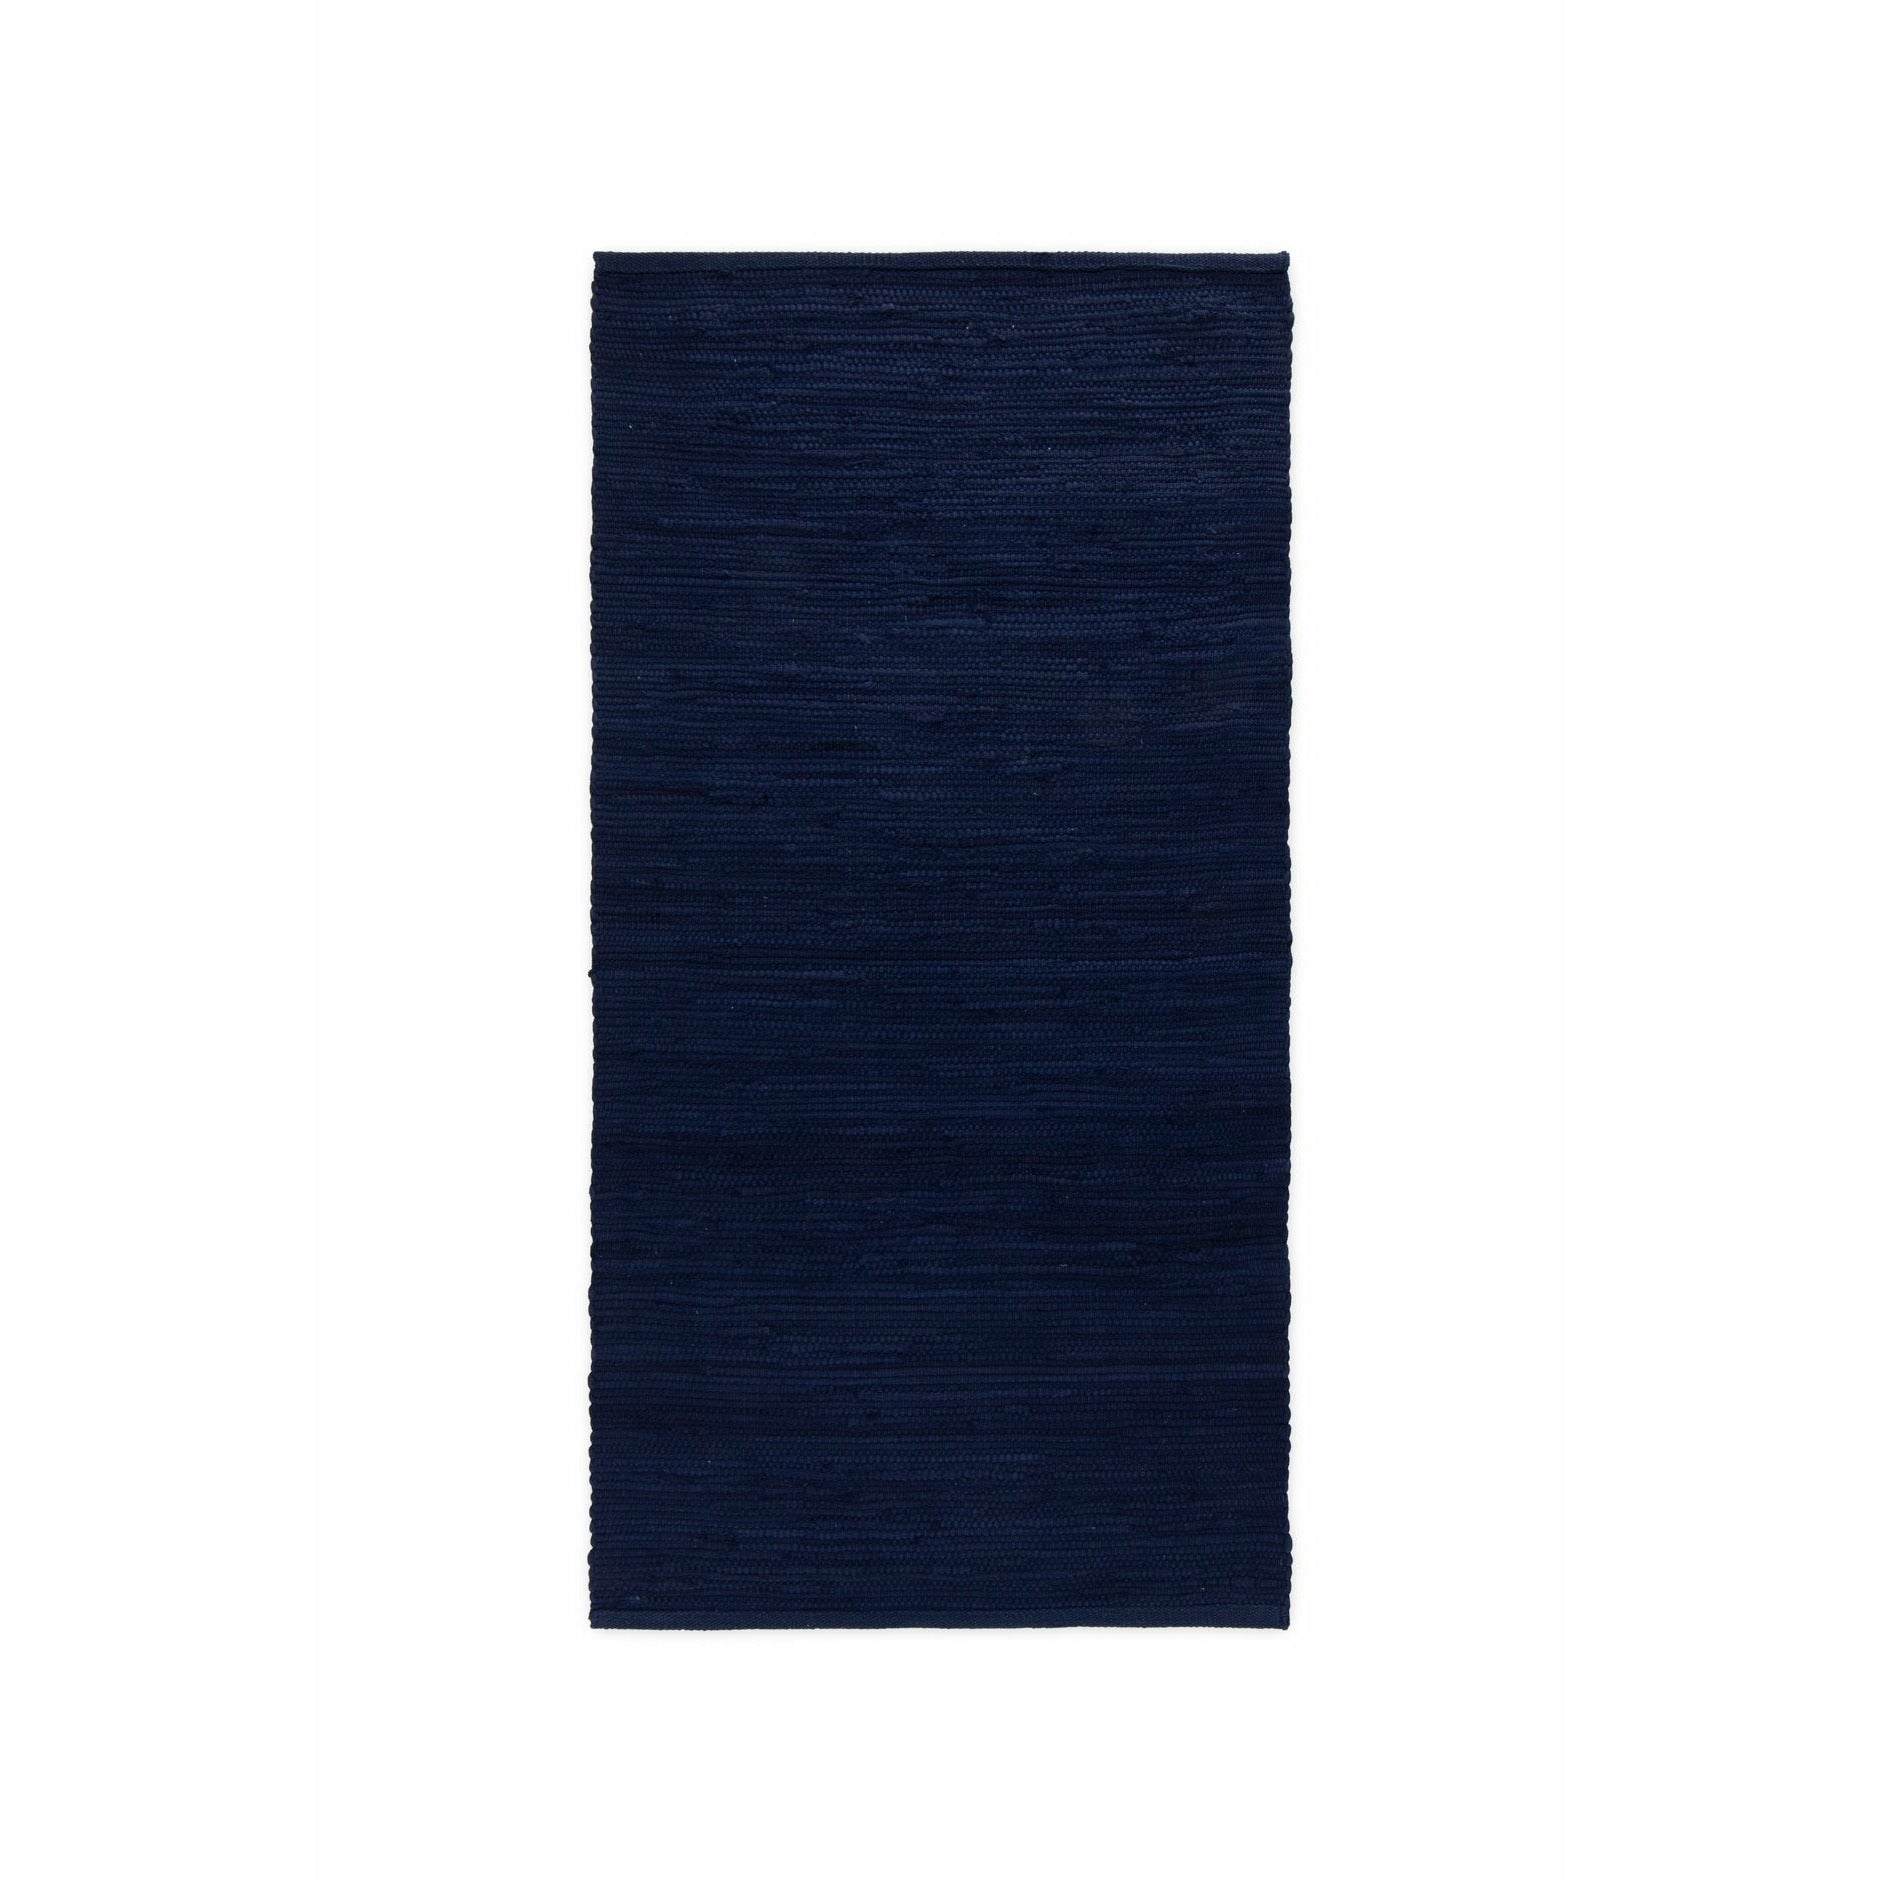 Rug Solid Coton tapis profond océan bleu, 170 x 240 cm